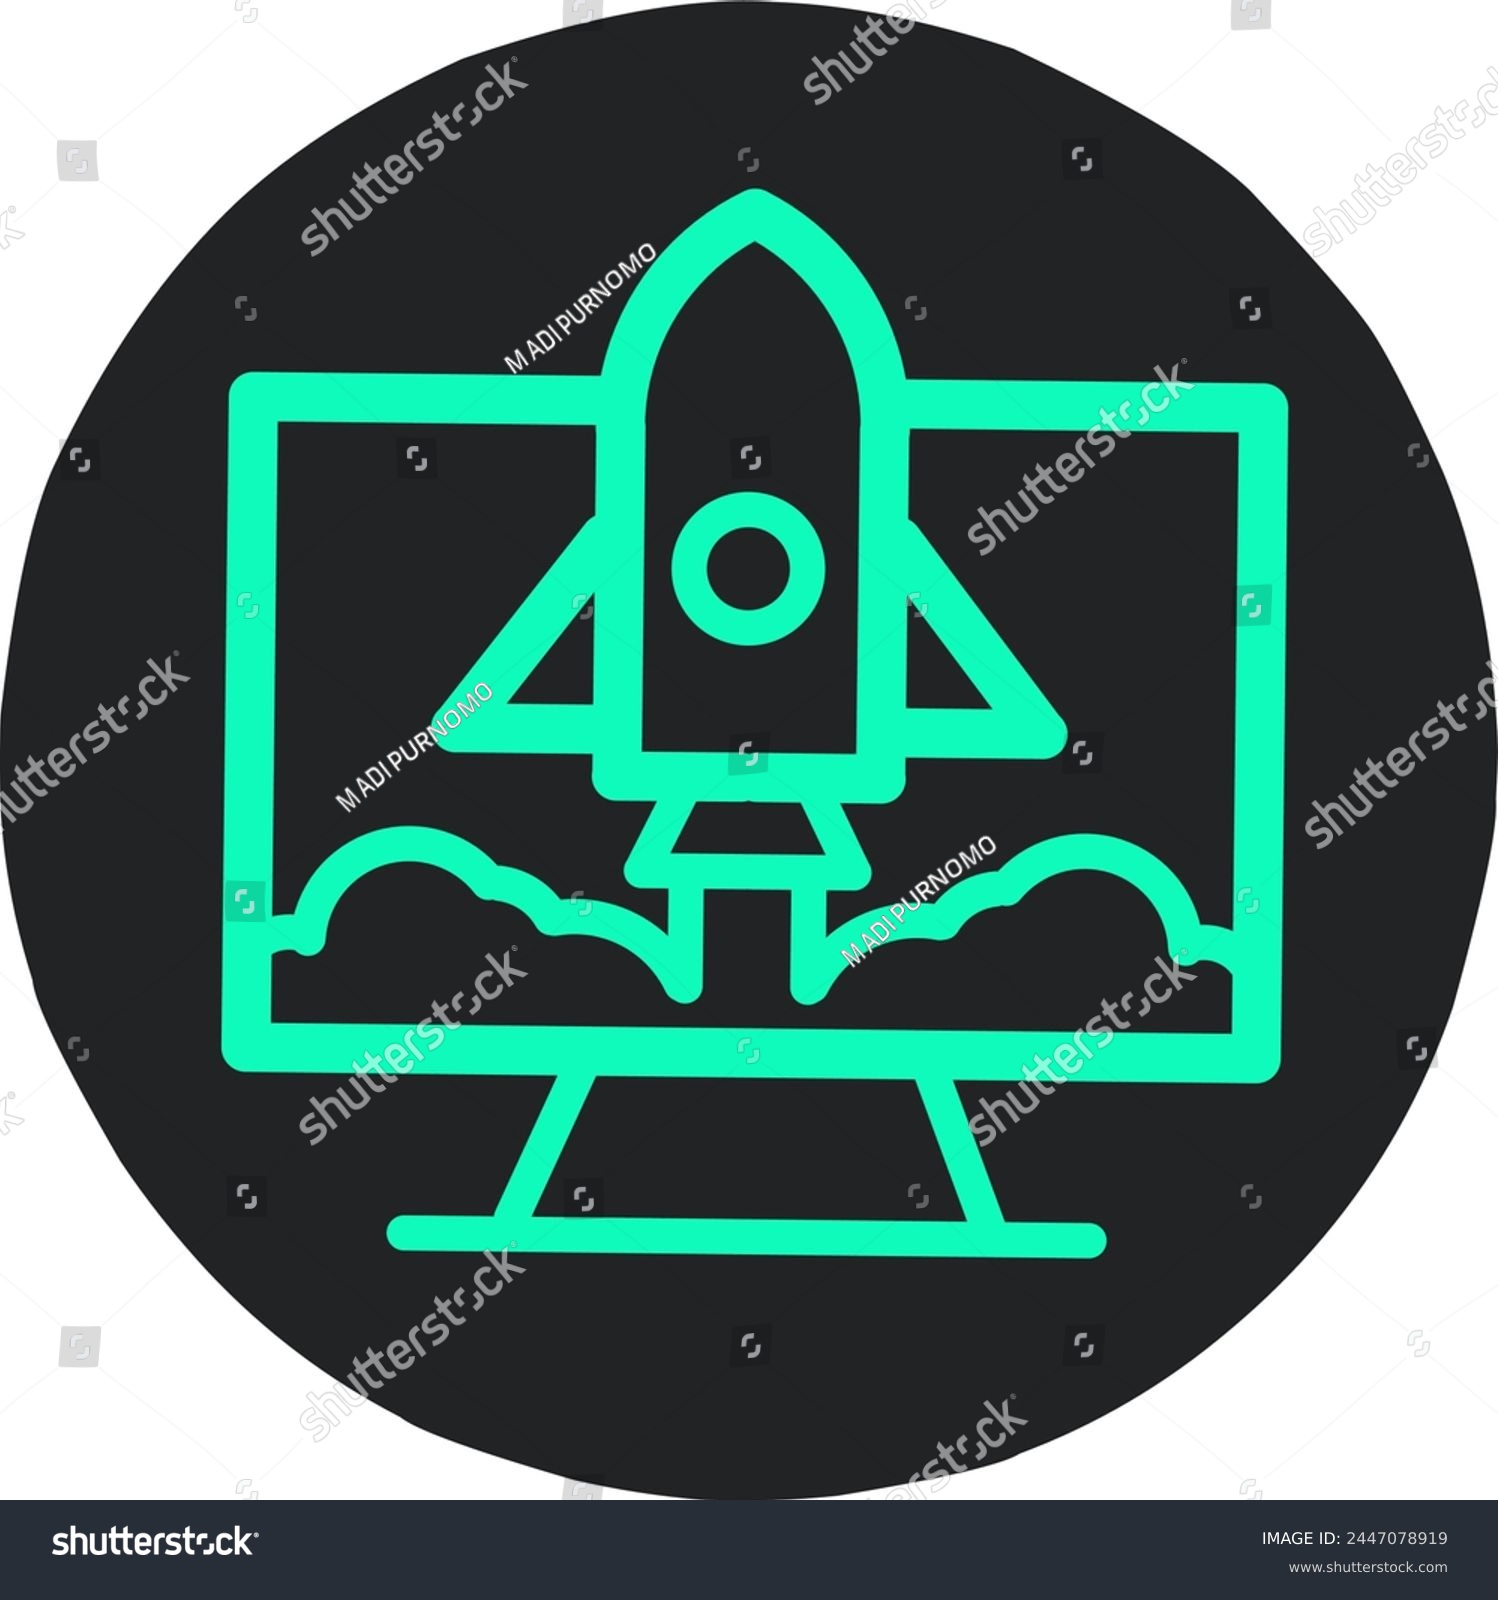 SVG of Rocket ride of laptop logo, increasing computer performance concept svg